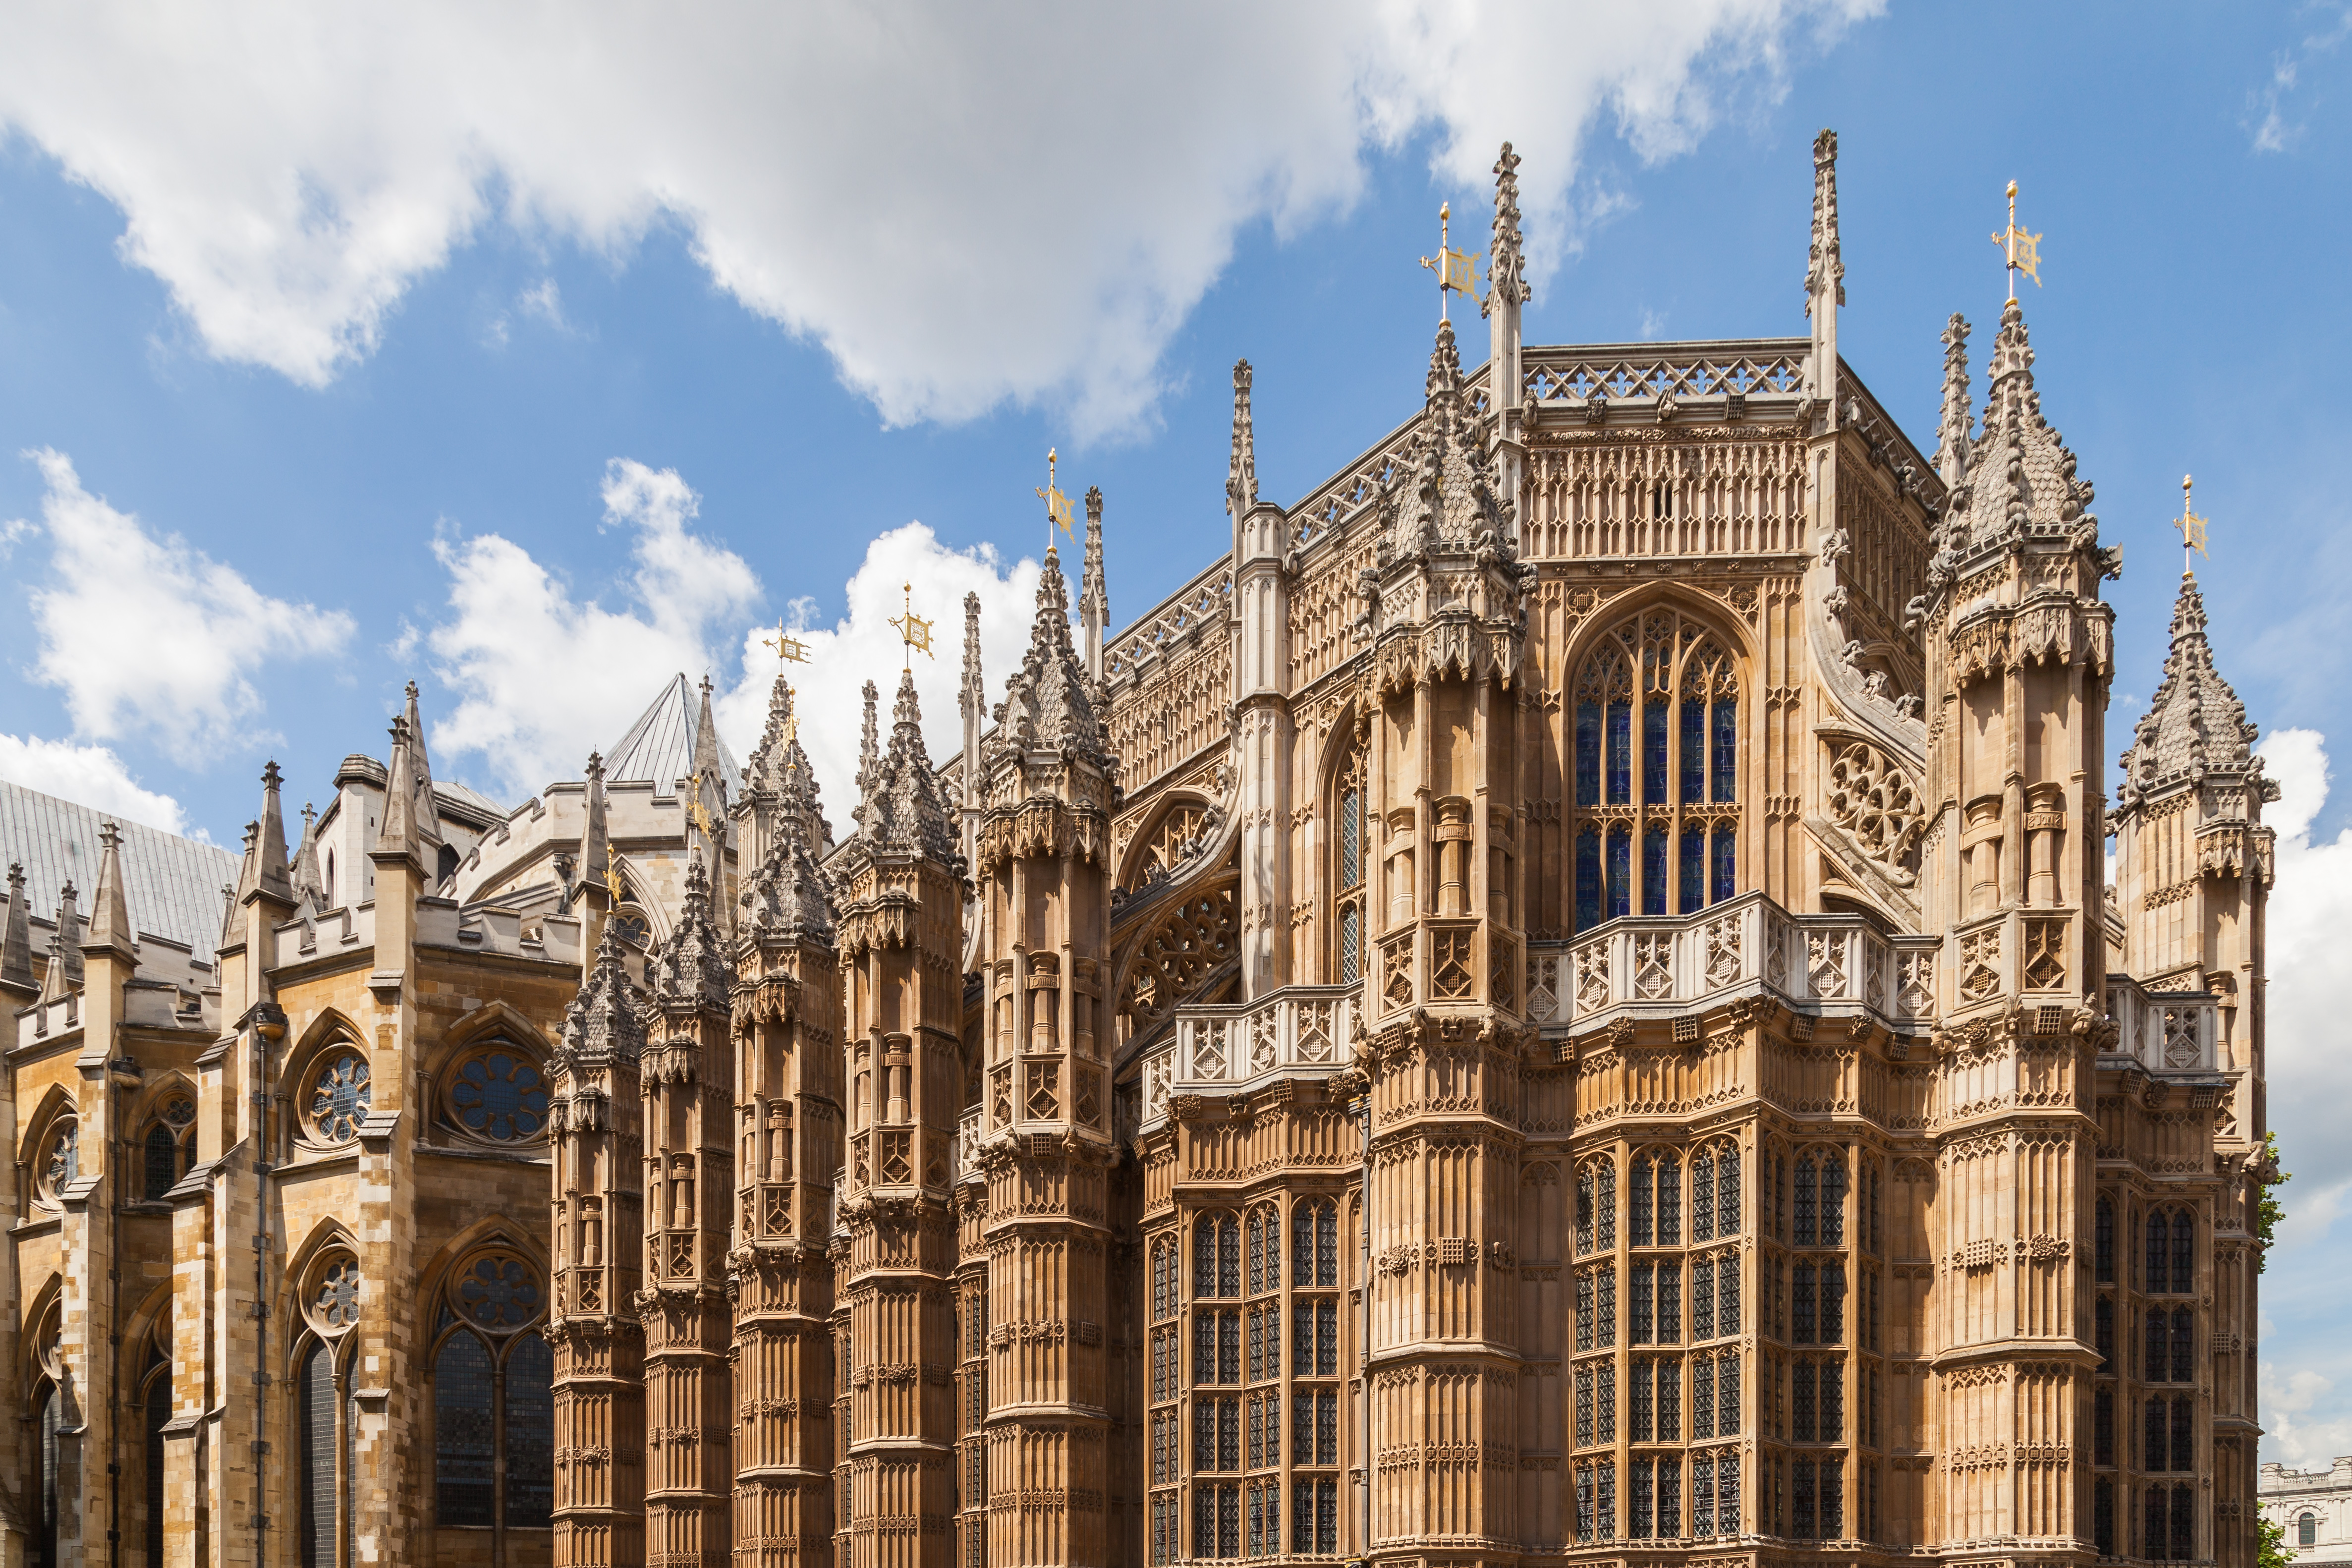 Palacio de Westminster, Londres, Inglaterra, 2014-08-07, DD 023